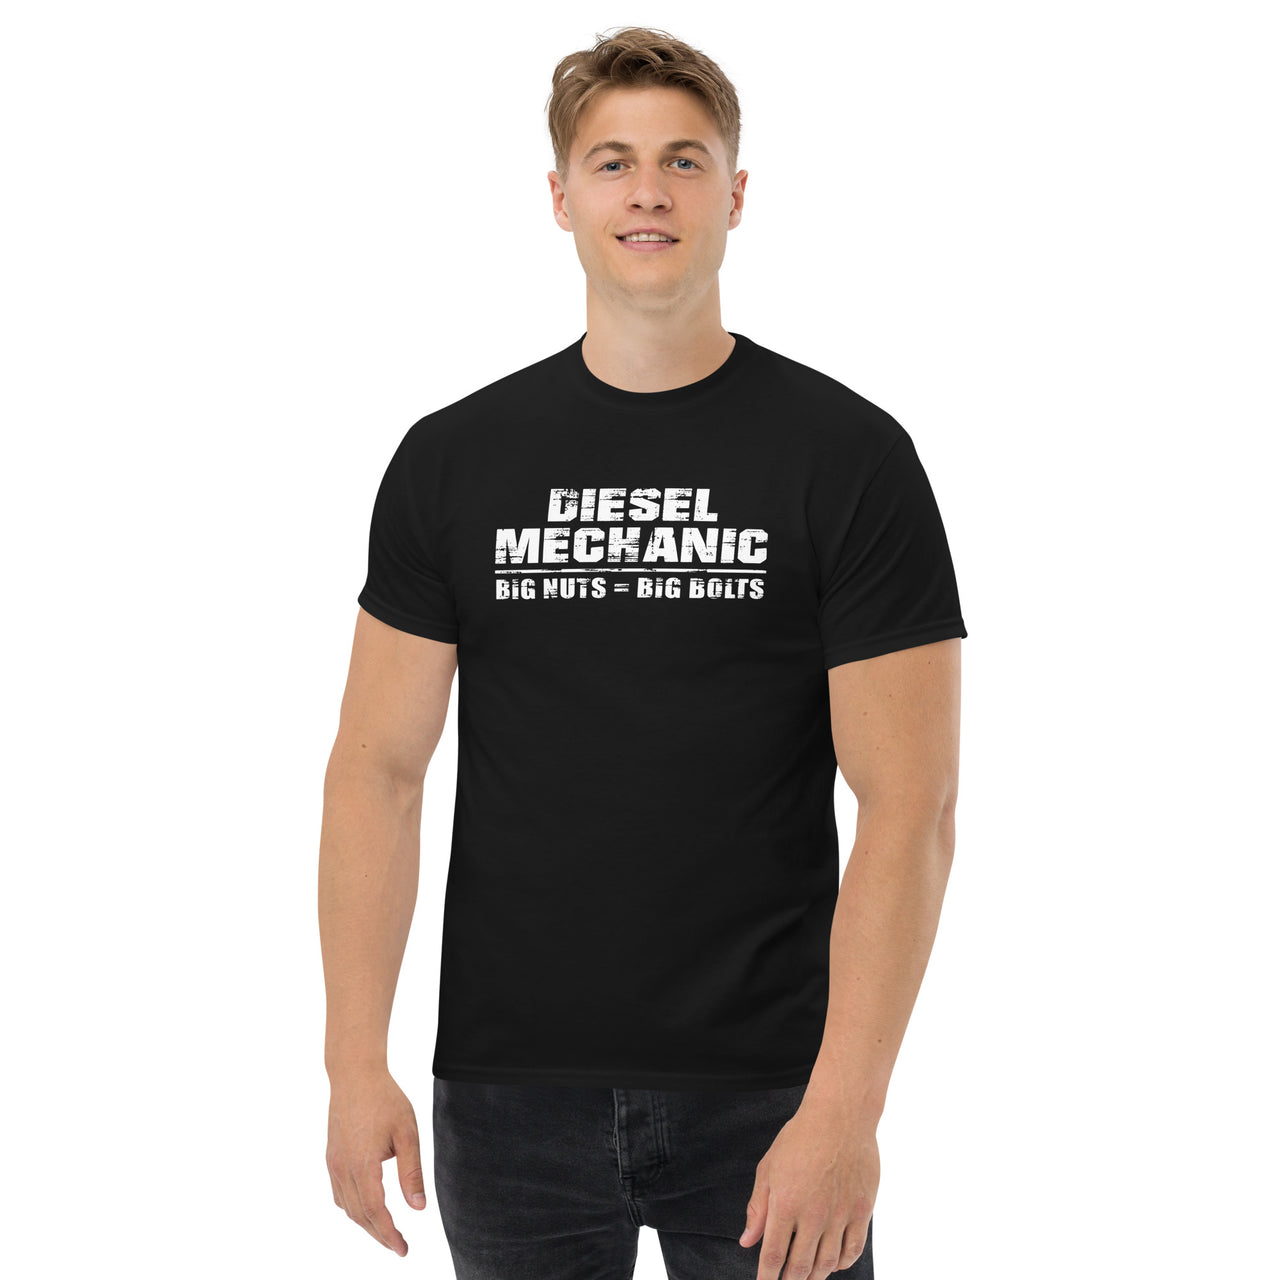 Funny Diesel Mechanic T-Shirt in black